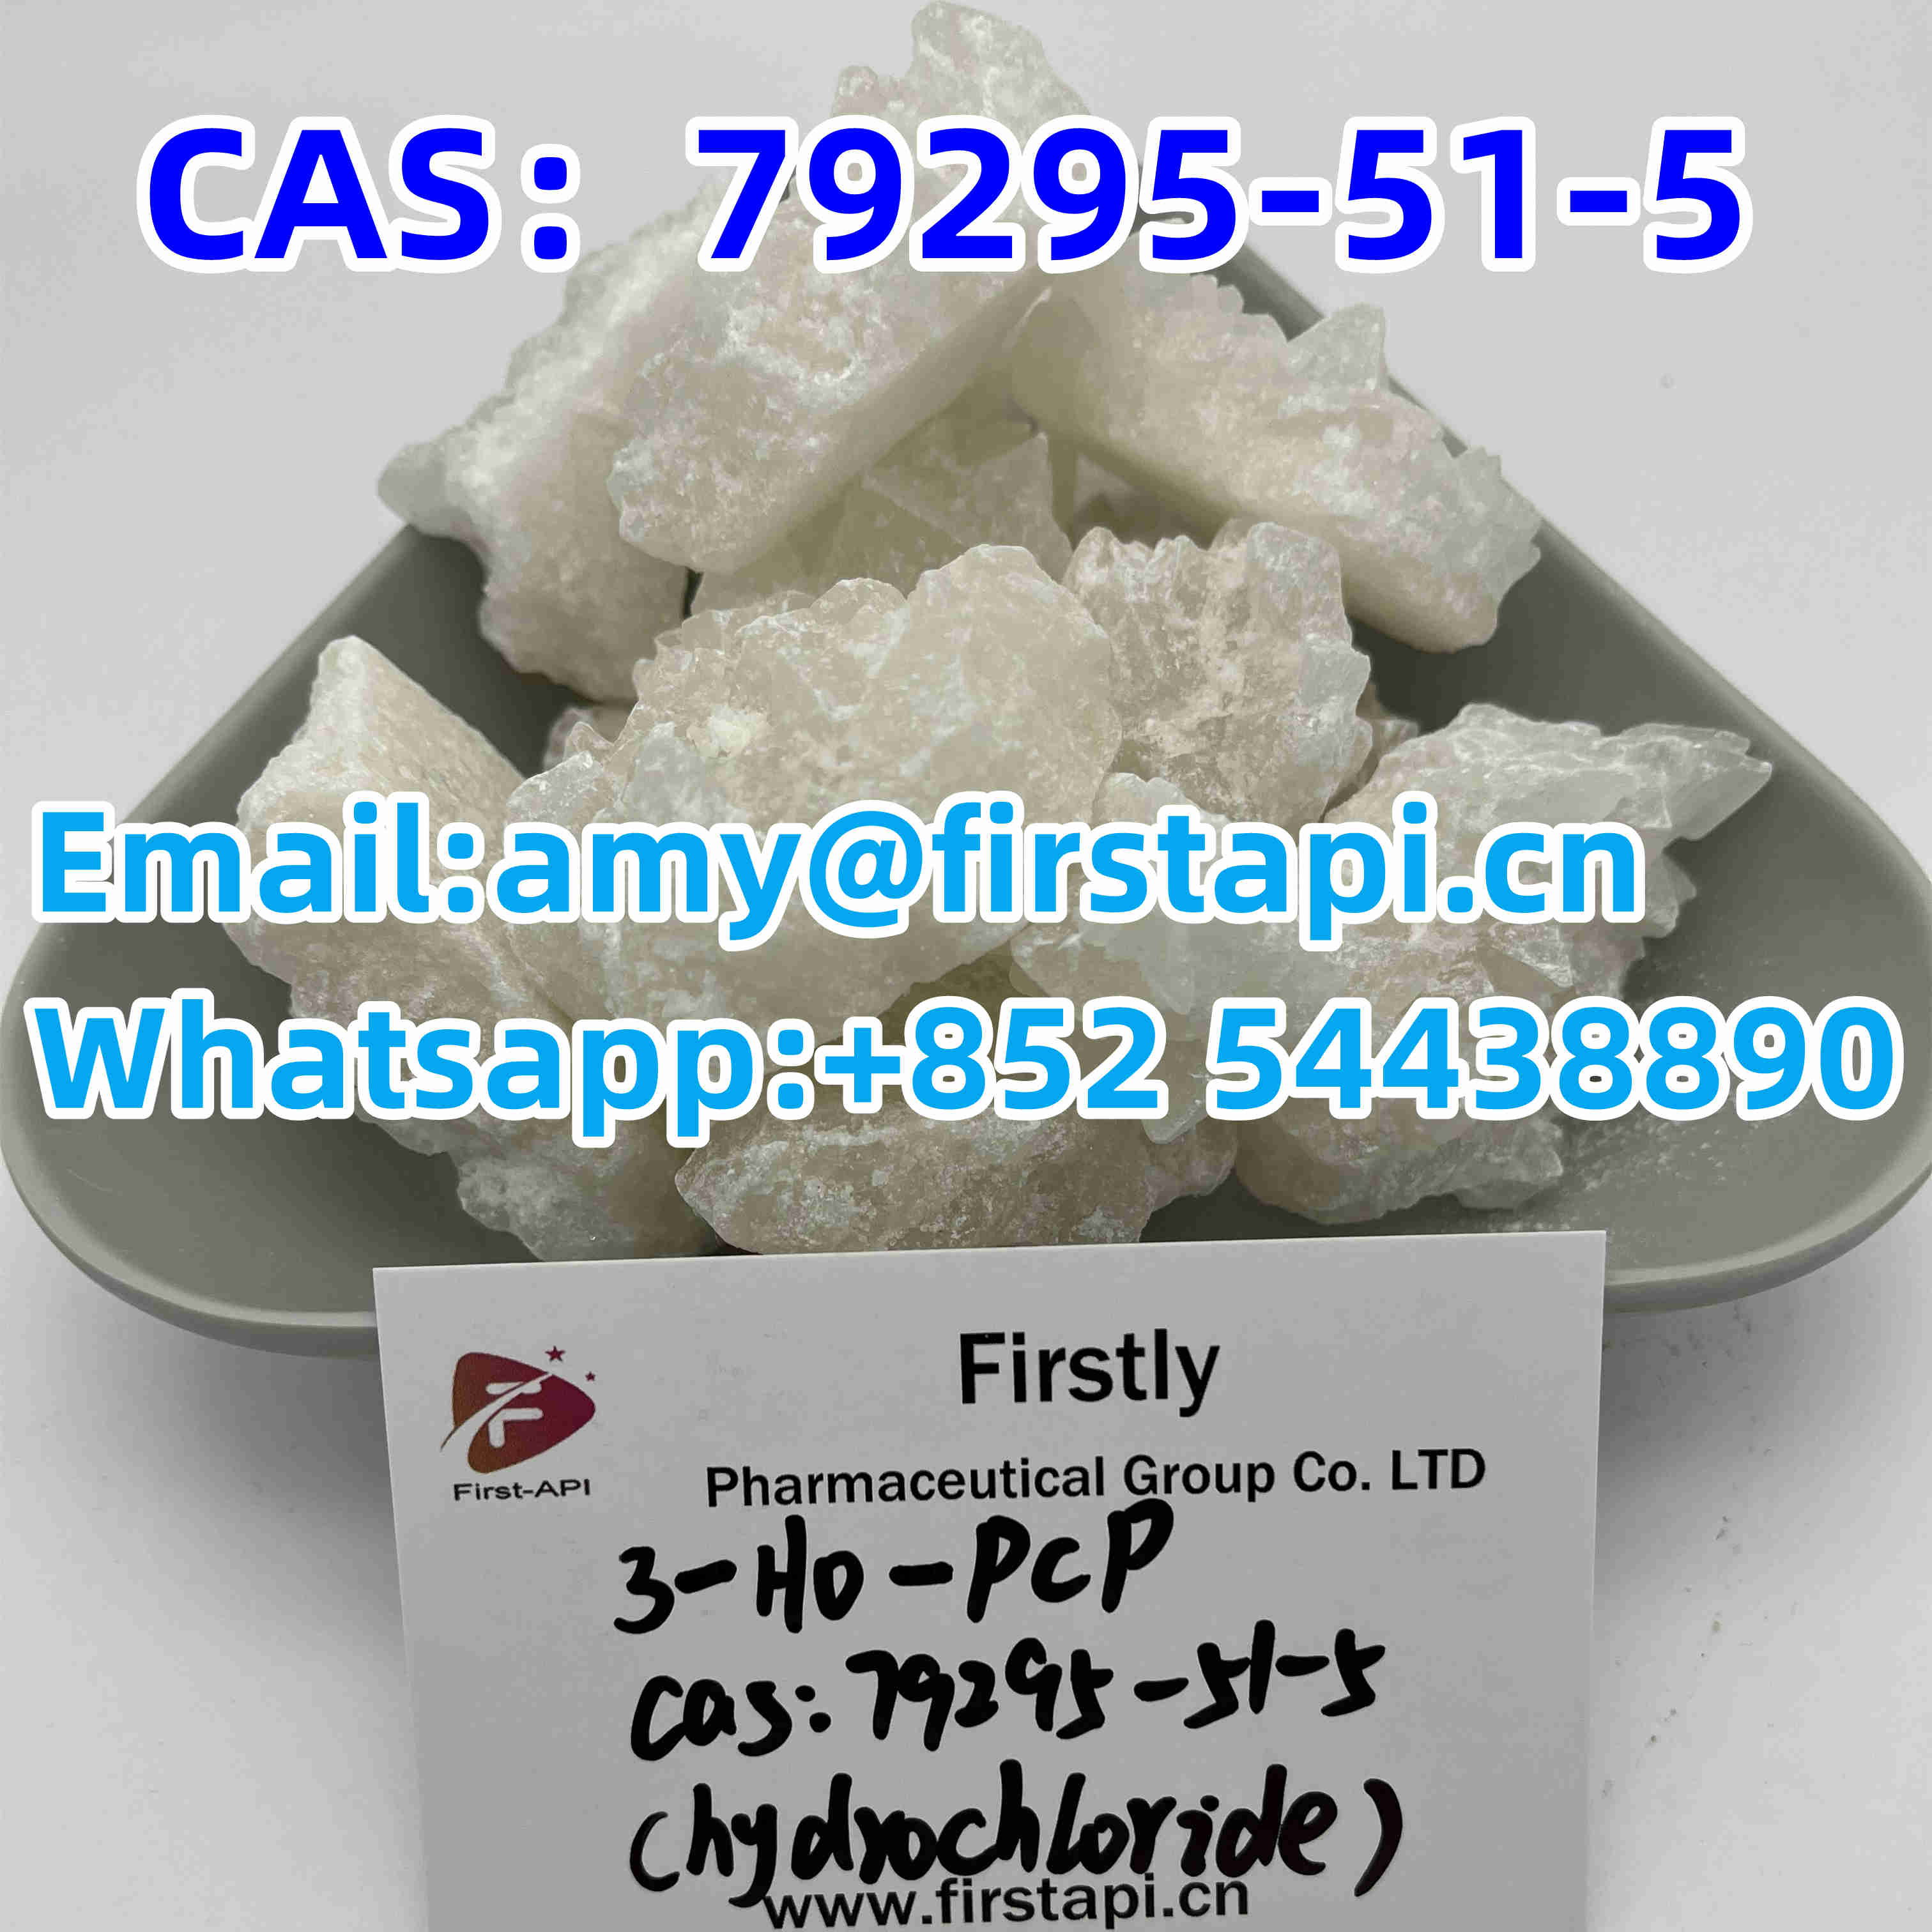 CAS No.:79295-51-5,Whatsapp:+852 54438890,Chemical Name: 3-HO-PCP, - photo